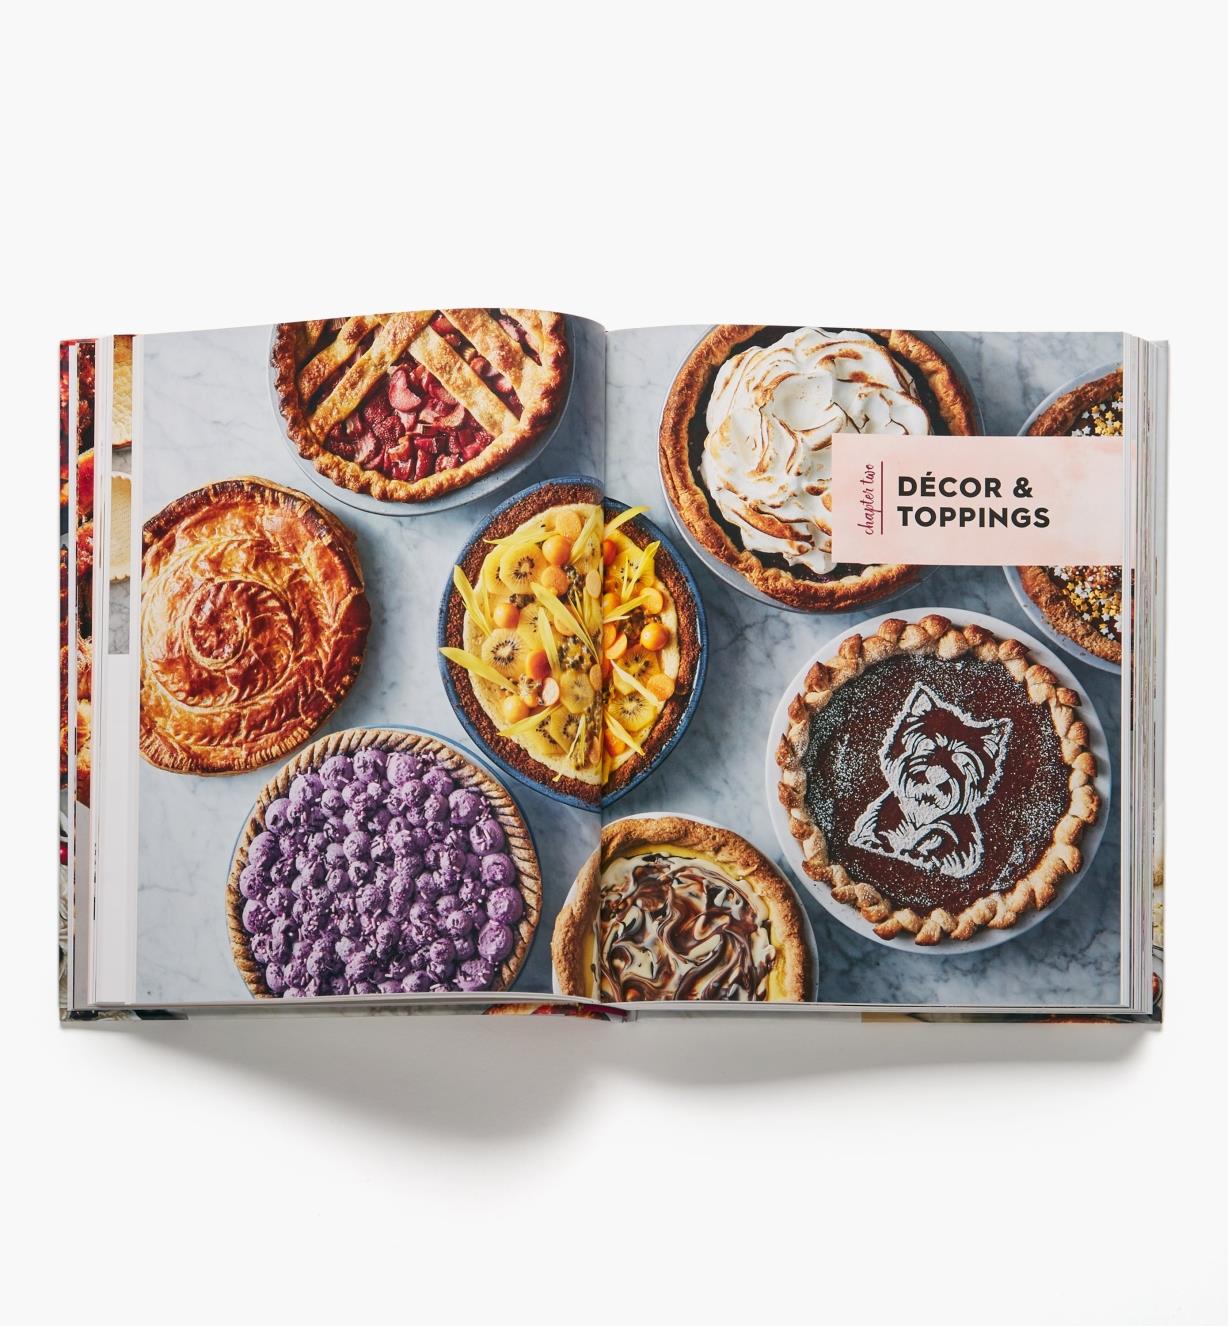 LA890 - The Book on Pie